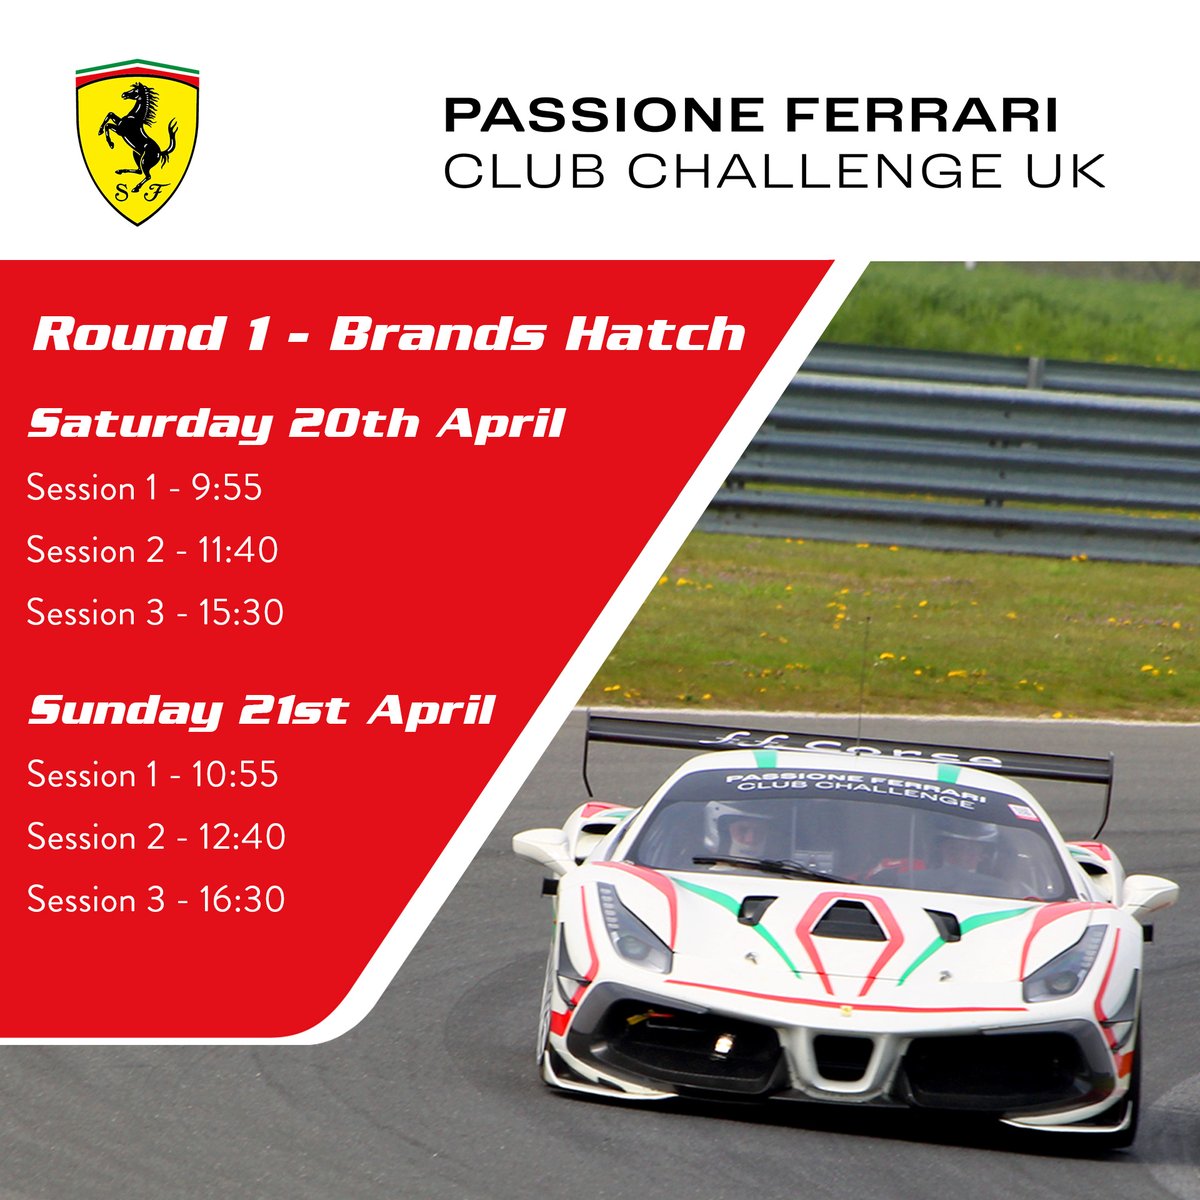 It is almost time! Round 1 of Ferrari Club Challenge UK kicks off this weekend at Brands Hatch. 

#ferrariraces #clubchallengeuk #ferrariracing #brandshatch #motorsport #ffcorse #racecar #ferrari